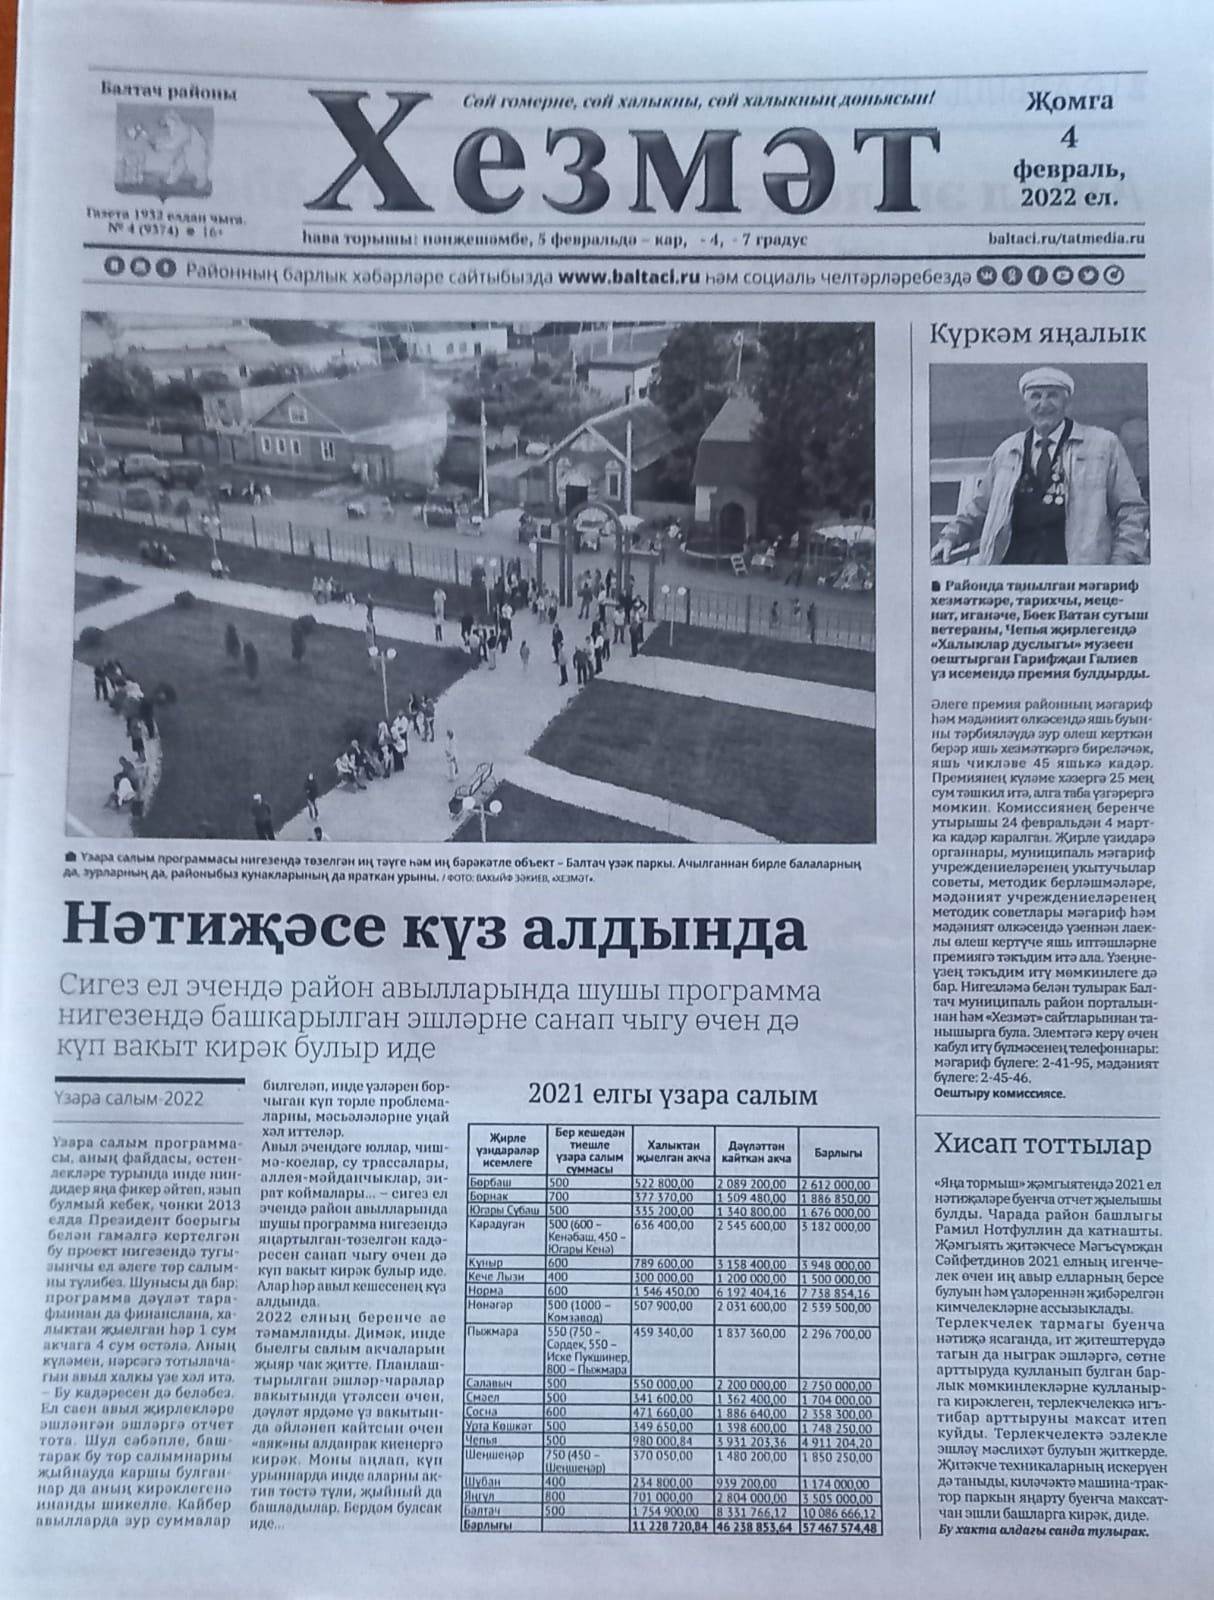 Газетаның 4нче санында (4 февраль, 2022 ел) чыгарылган белдерүләр һәм рекламалар